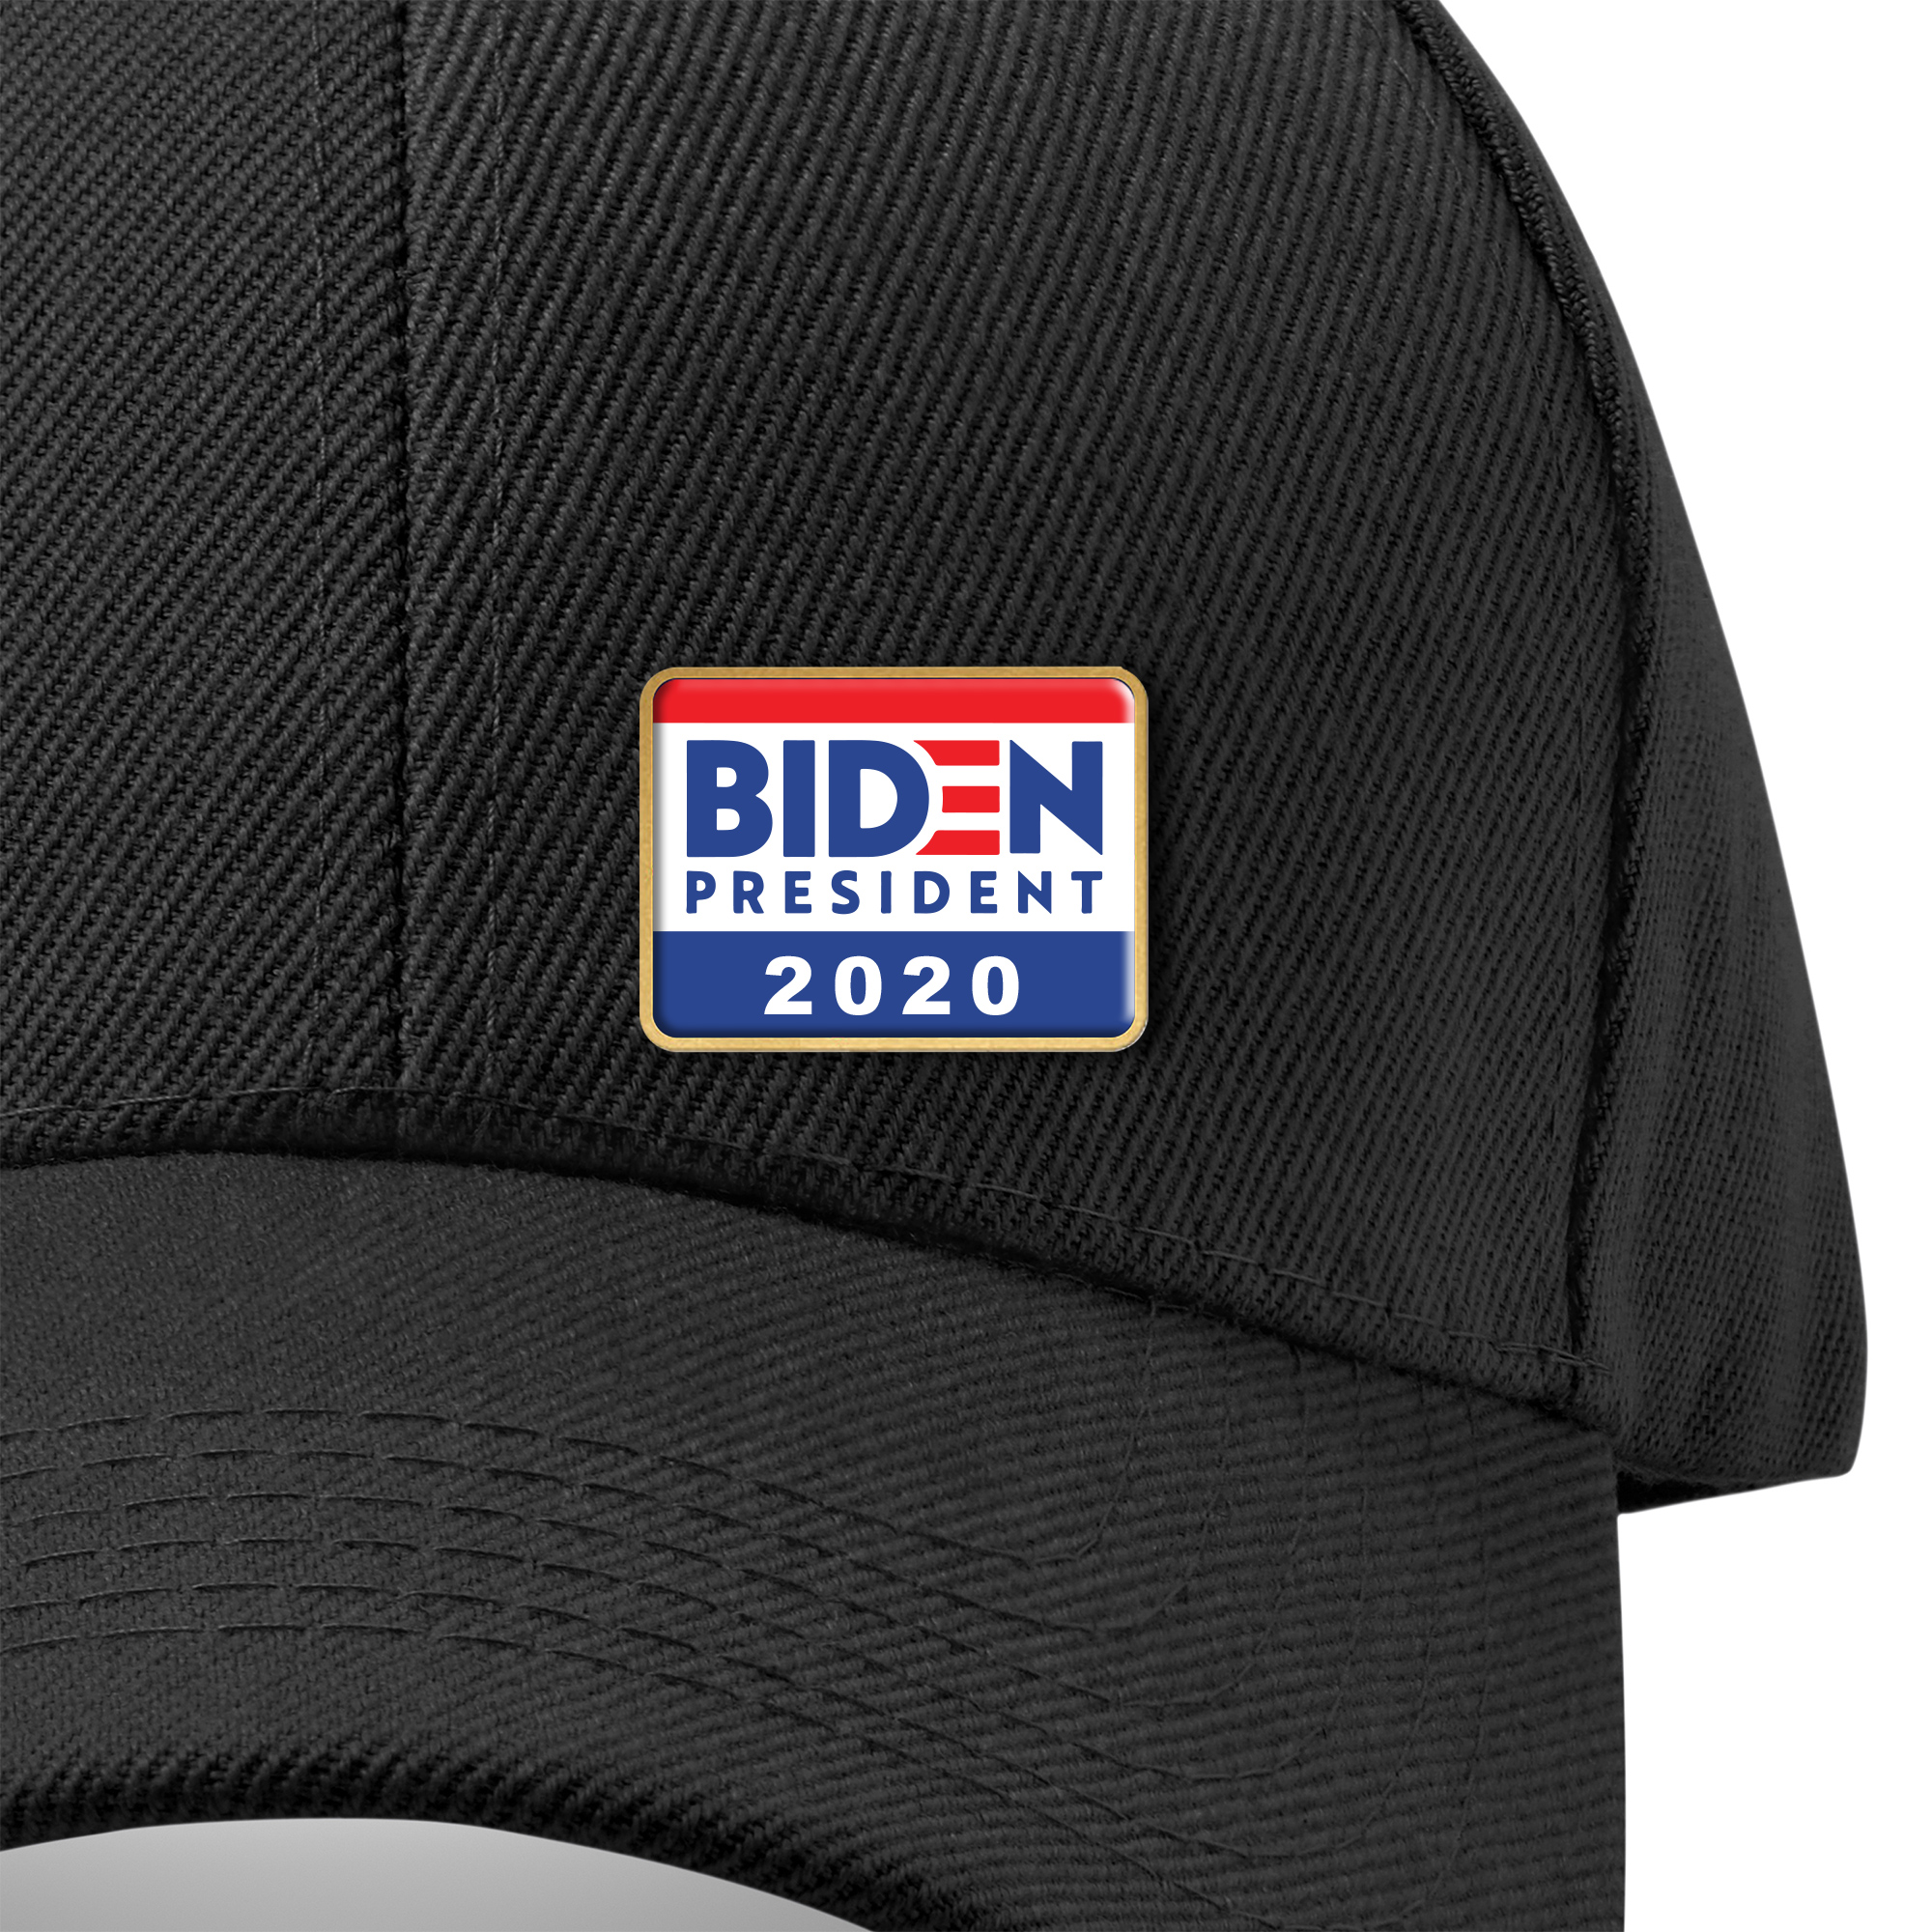 Biden President 2020 Rounded Corner Rectangle Pin - 1.25 x 1 inch